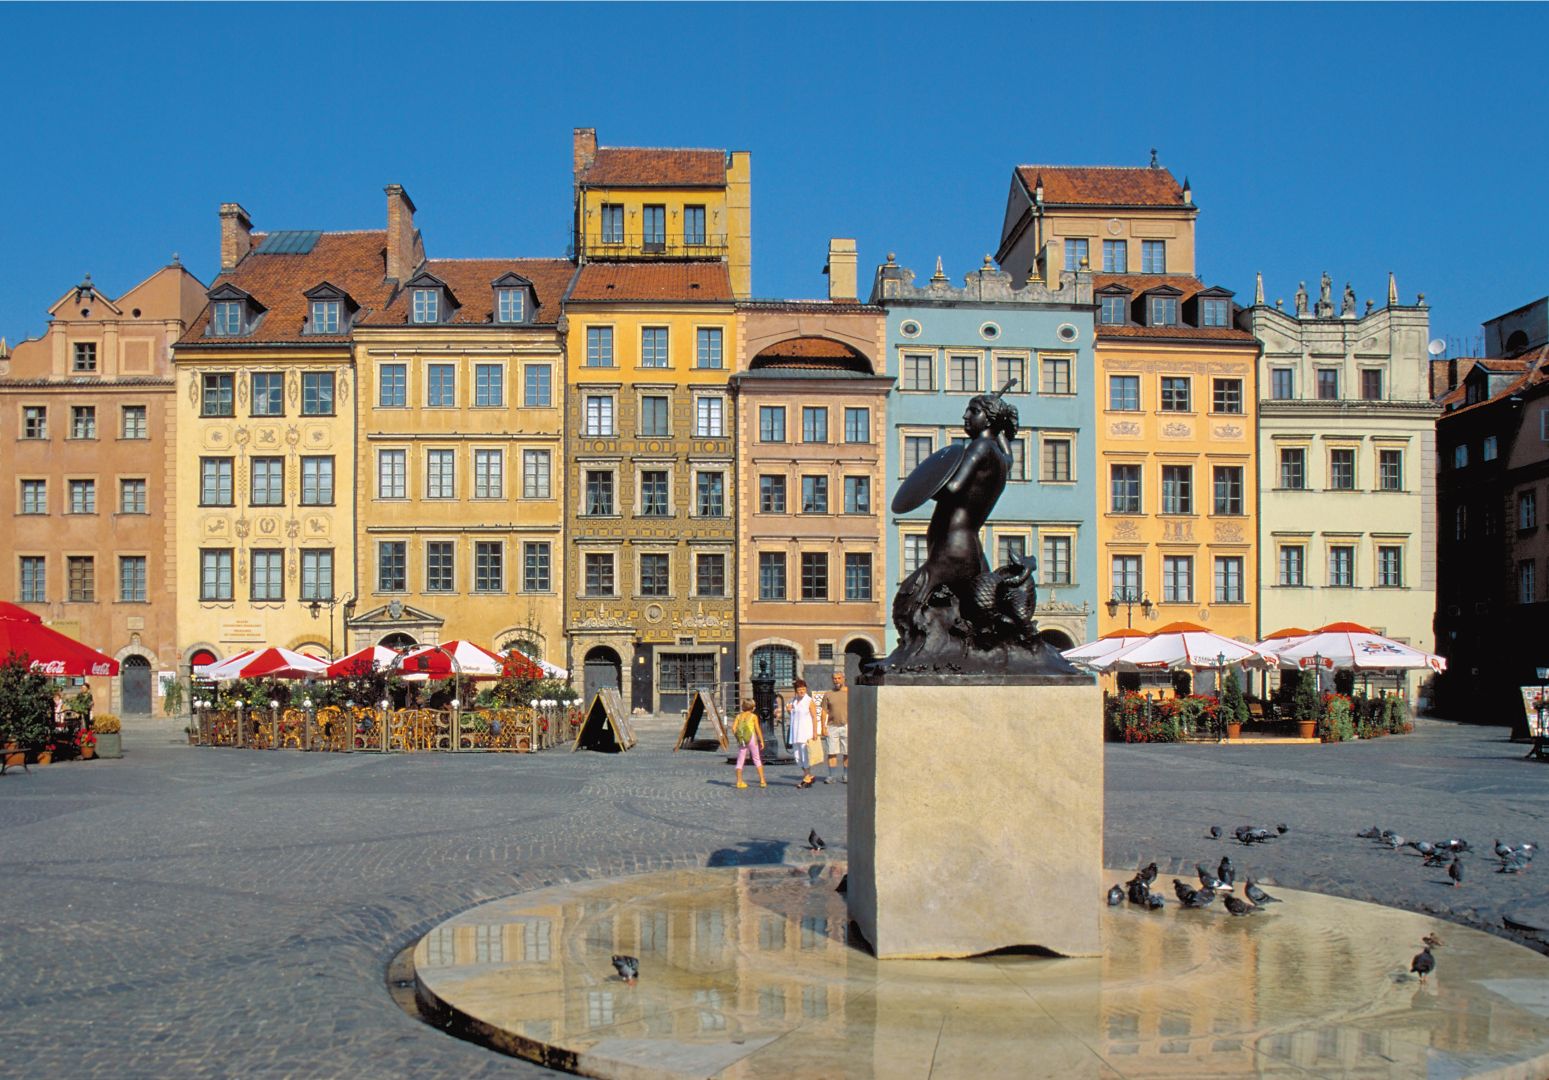 Warsaw Mermaid - Old Town Market Square